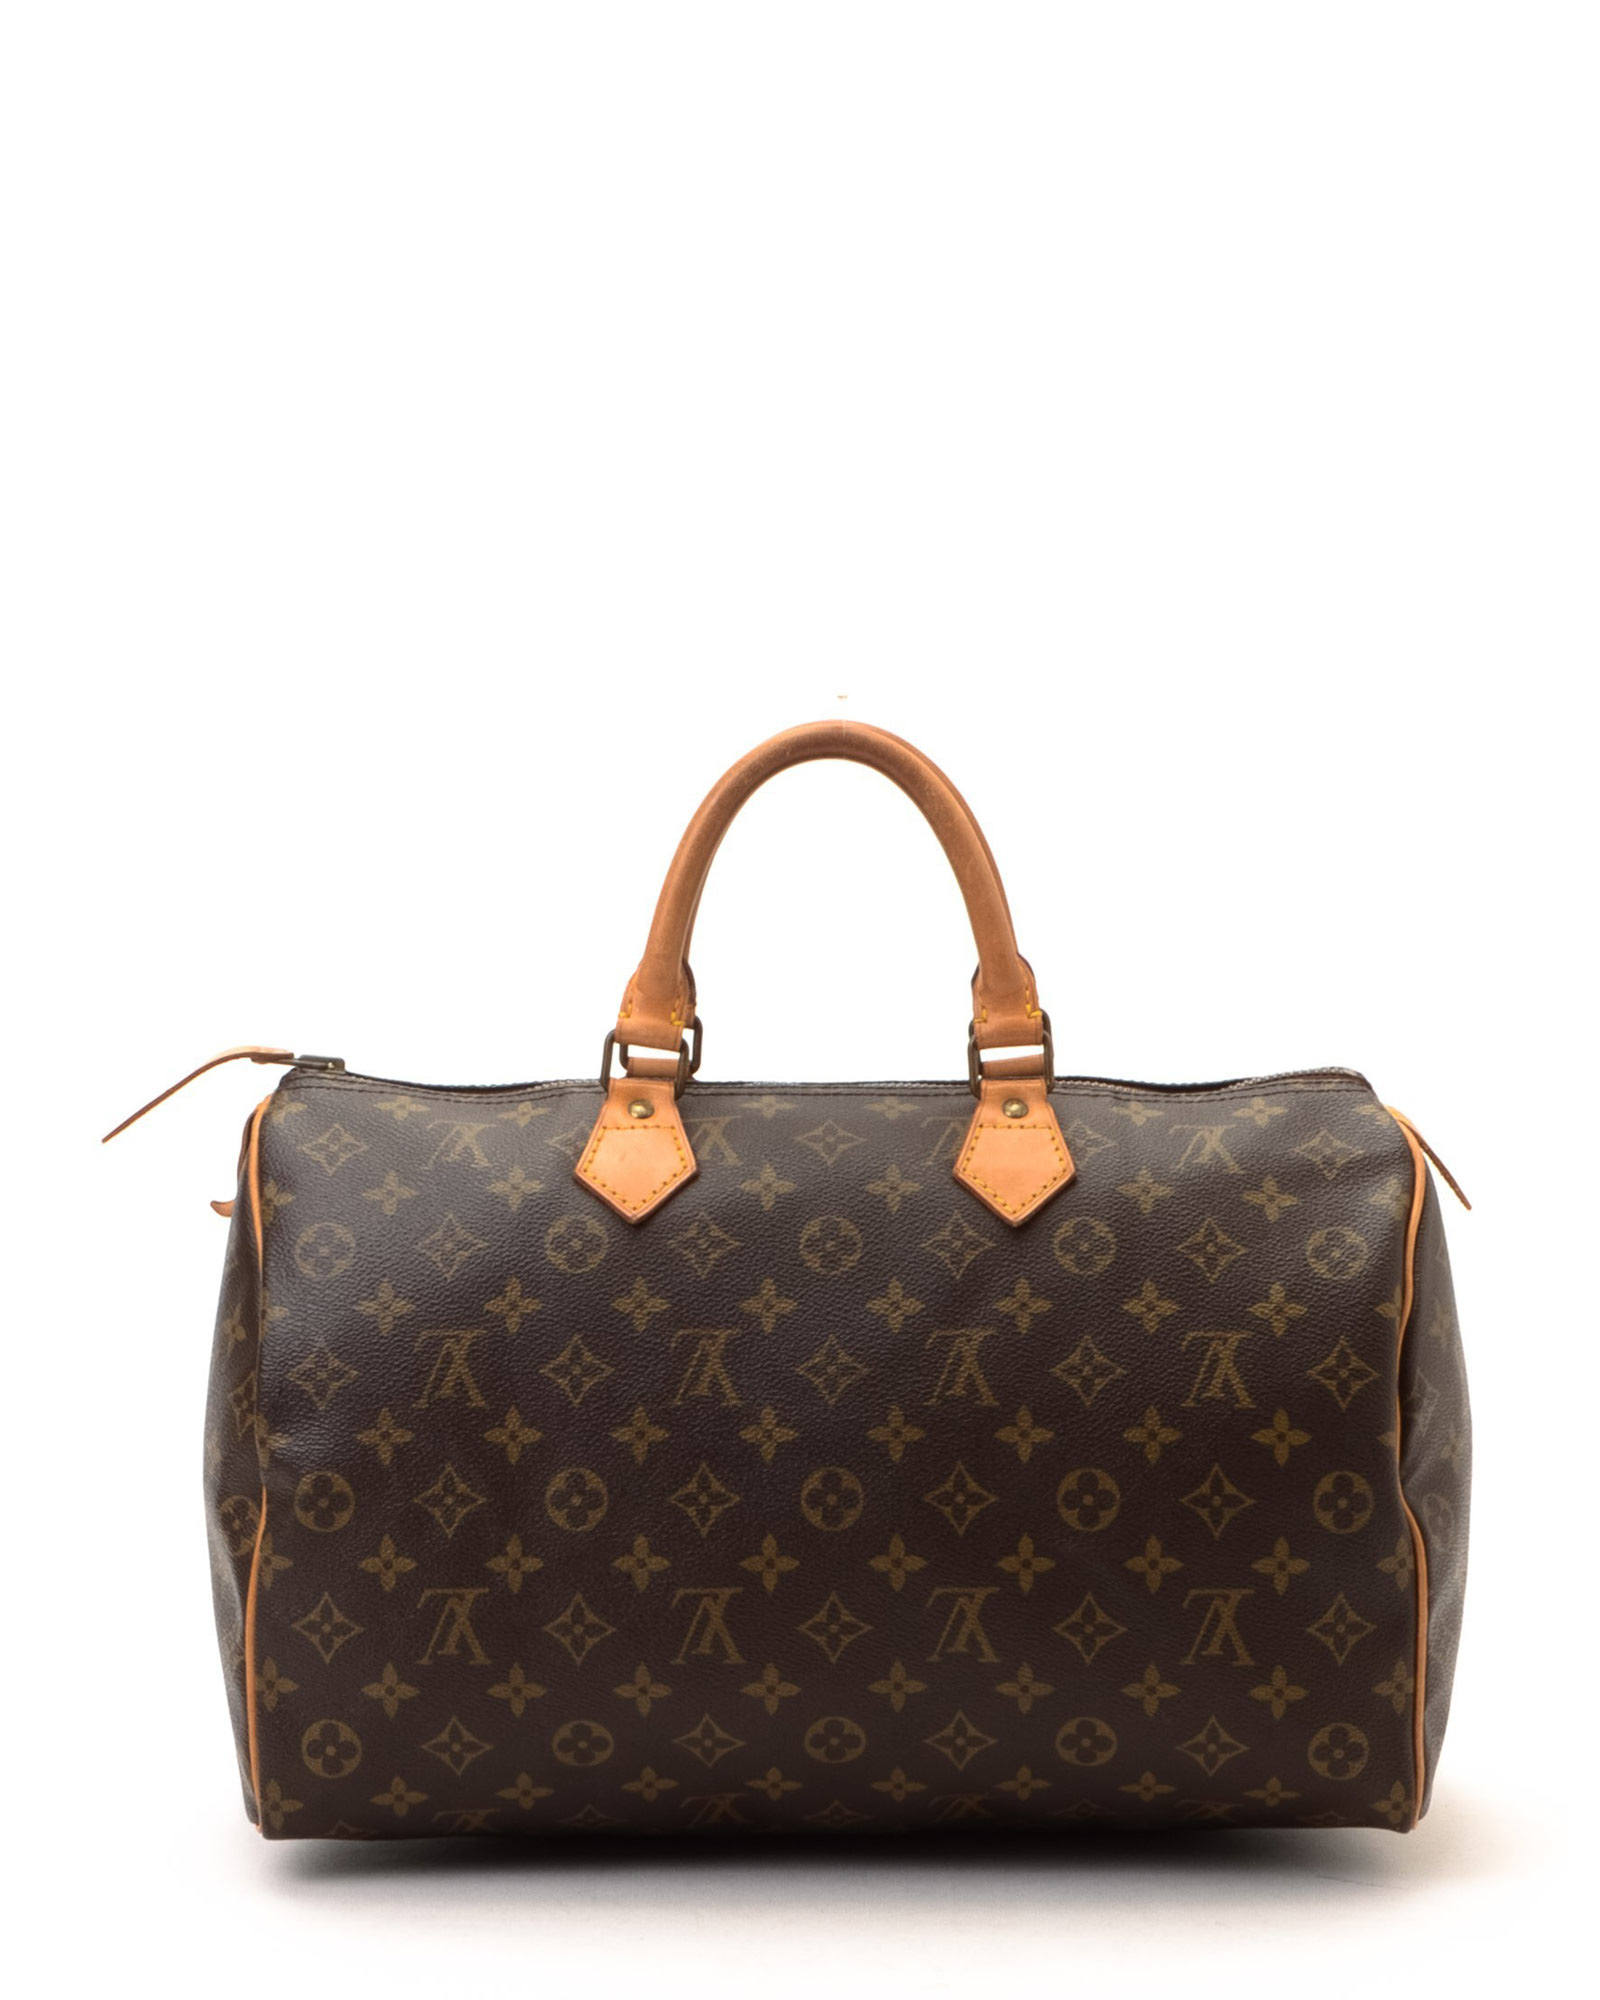 Lyst - Louis Vuitton Handbag in Brown